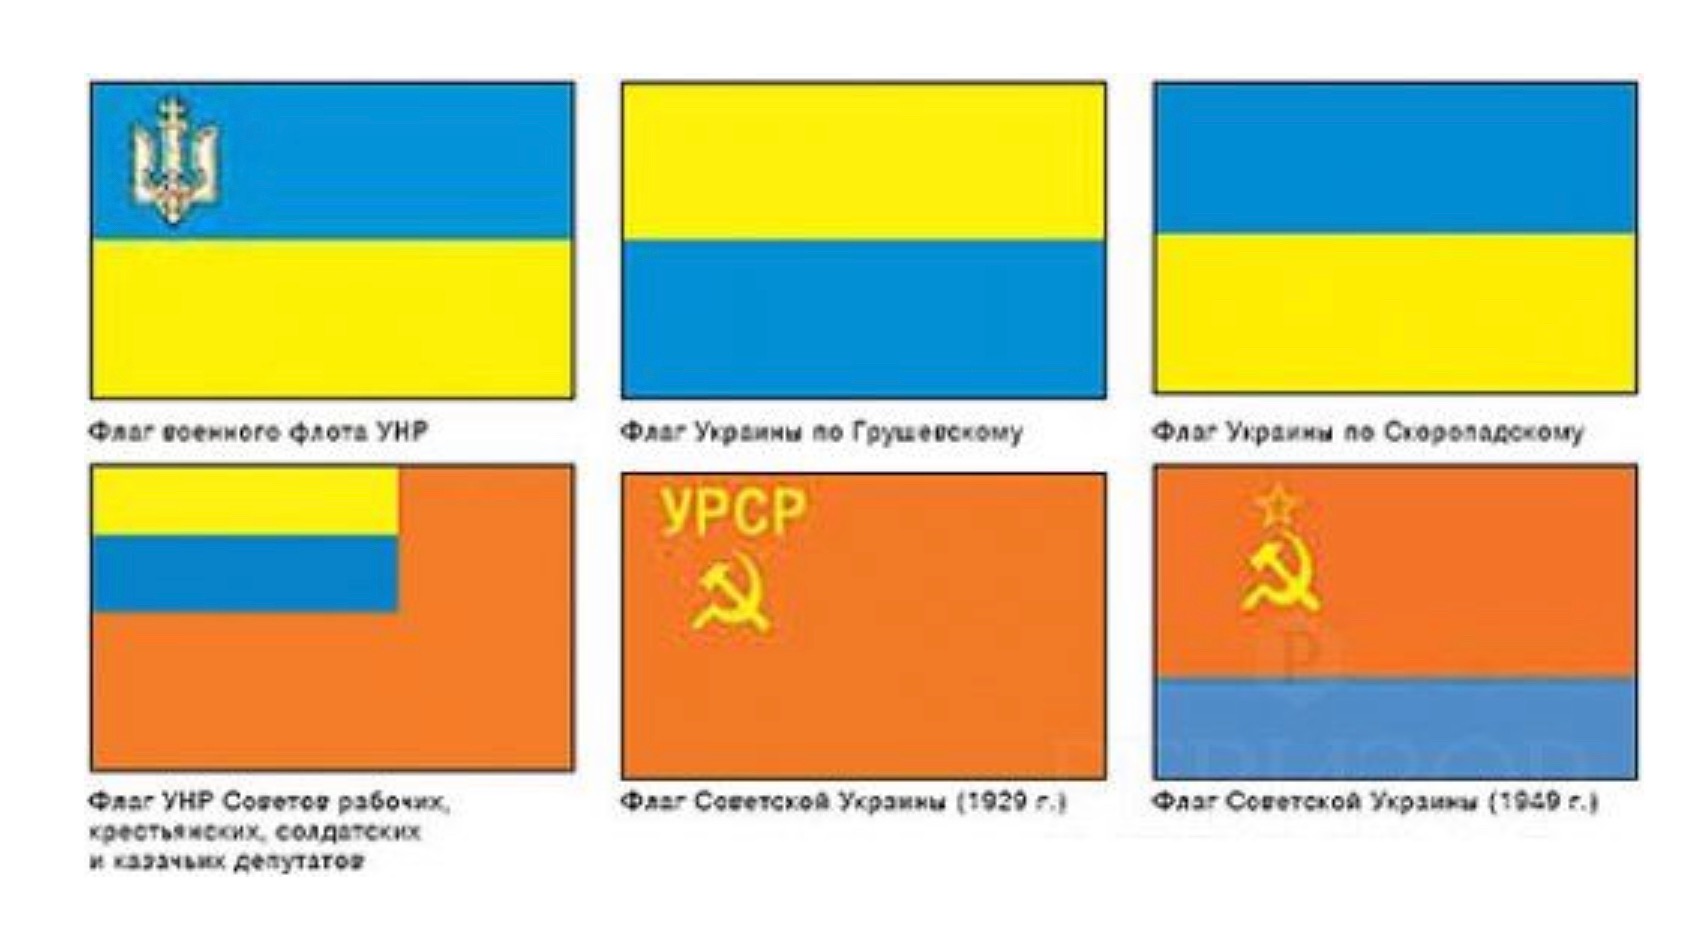 Сине желтый флаг украины. Желто-голубой флаг УНР. Флаг Украины до 1917 года. Флаг Украины до революции 1917 года. Жёлто-синий флаг УНР.